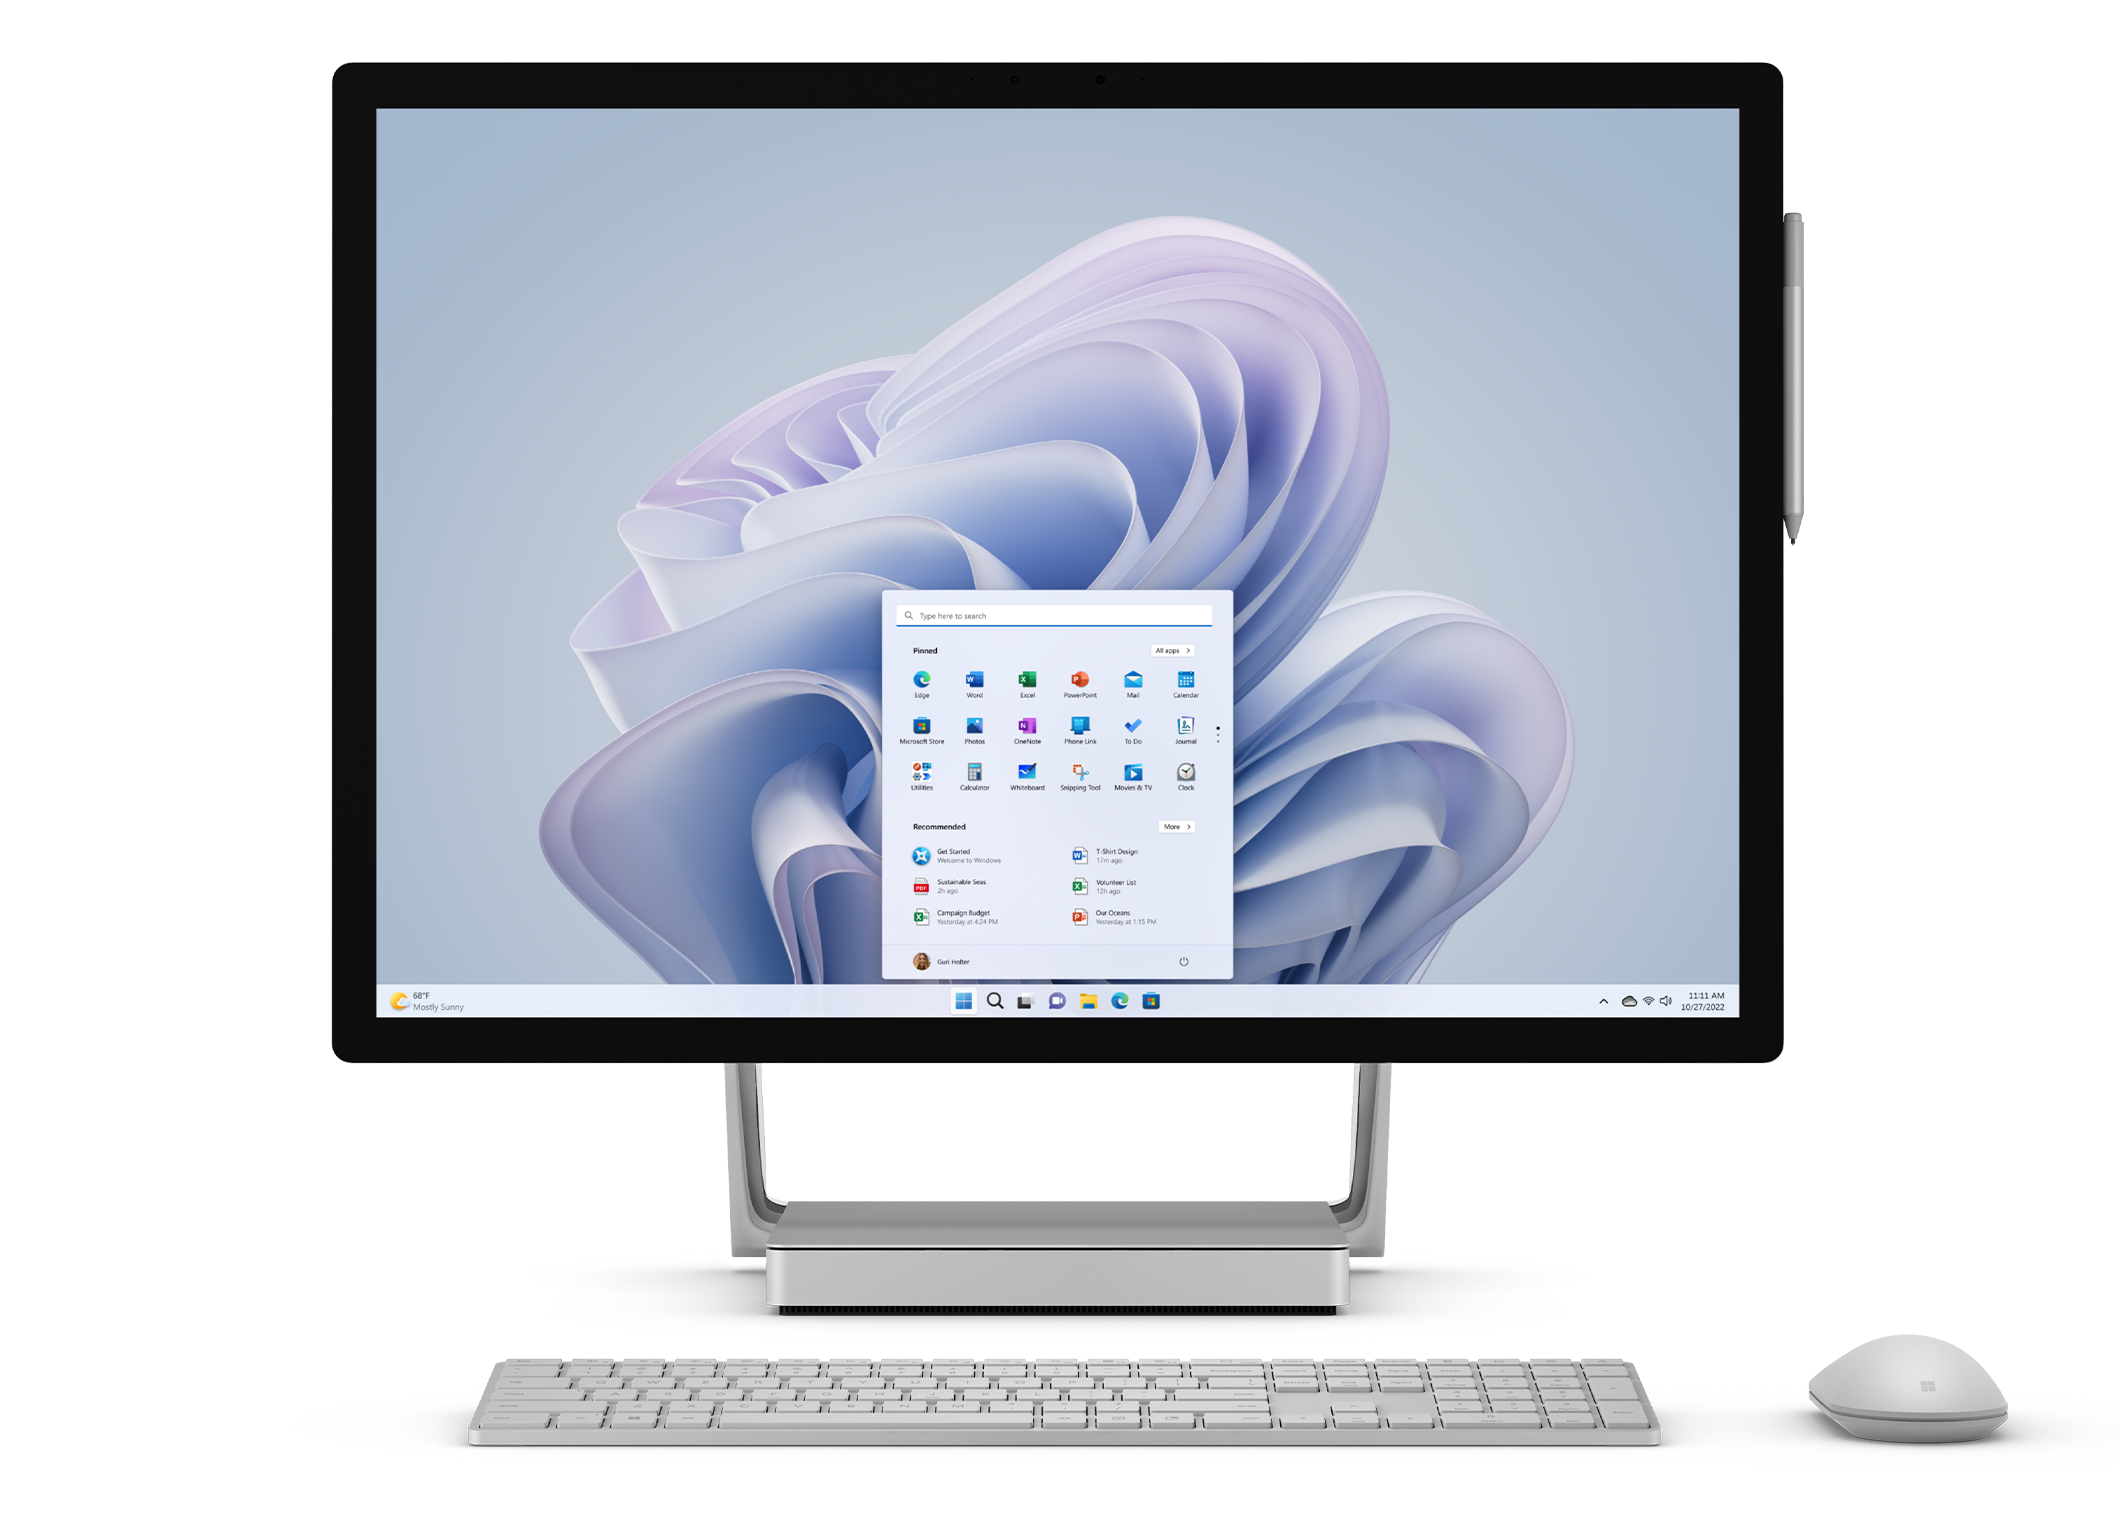 Surface Studio 42L-00013PC/タブレット